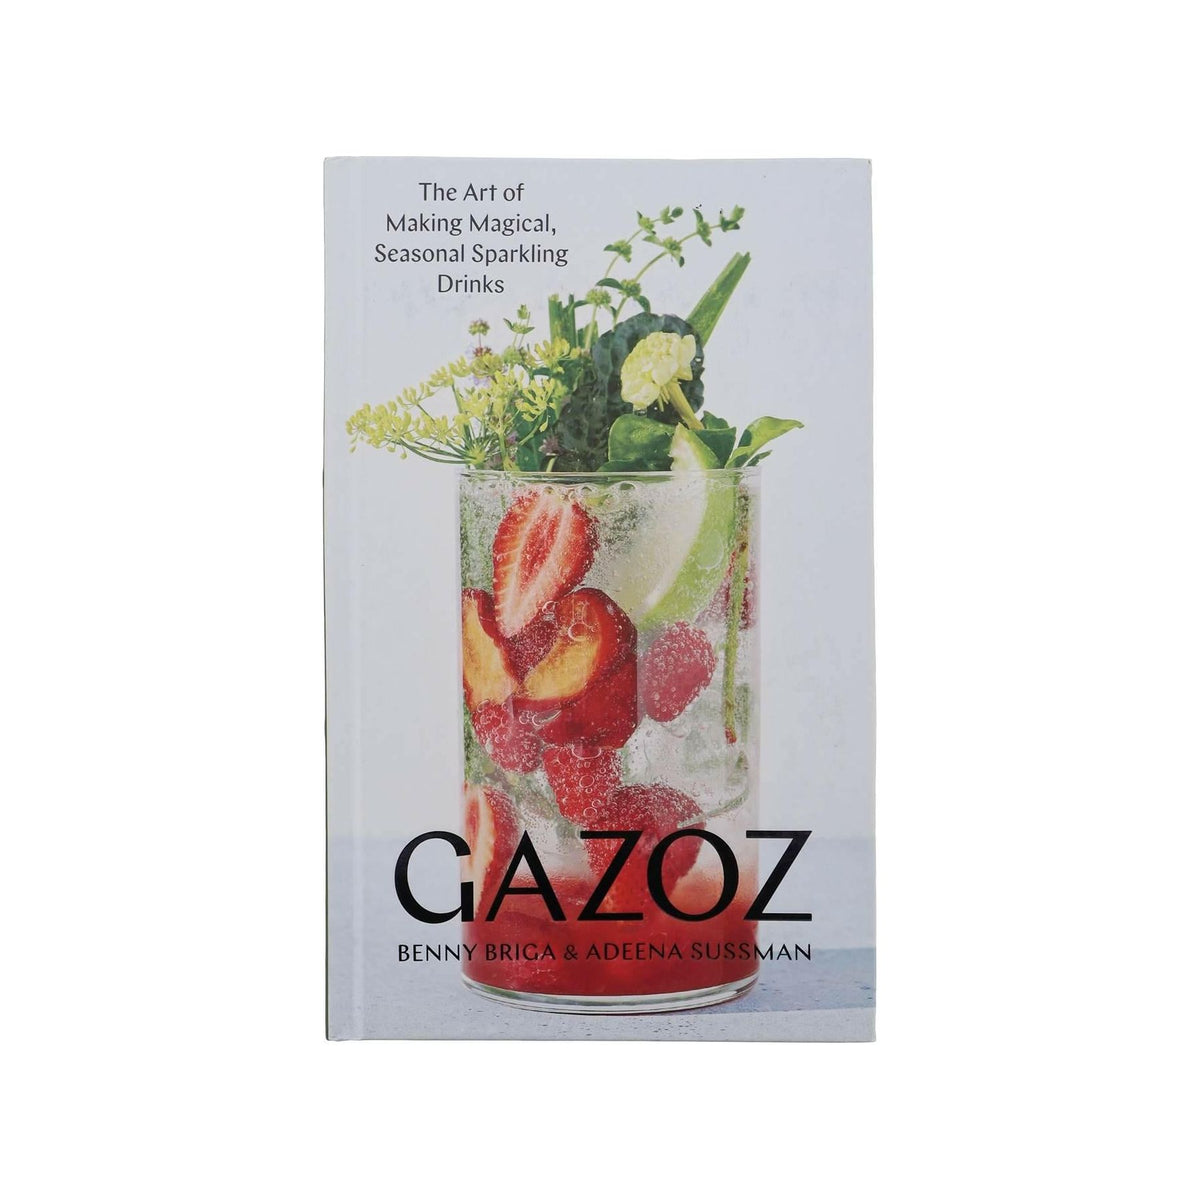 New Mags Gazoz The Art Of Making Magical, Seasonal Sparkling Drinks - JOHN JULIA